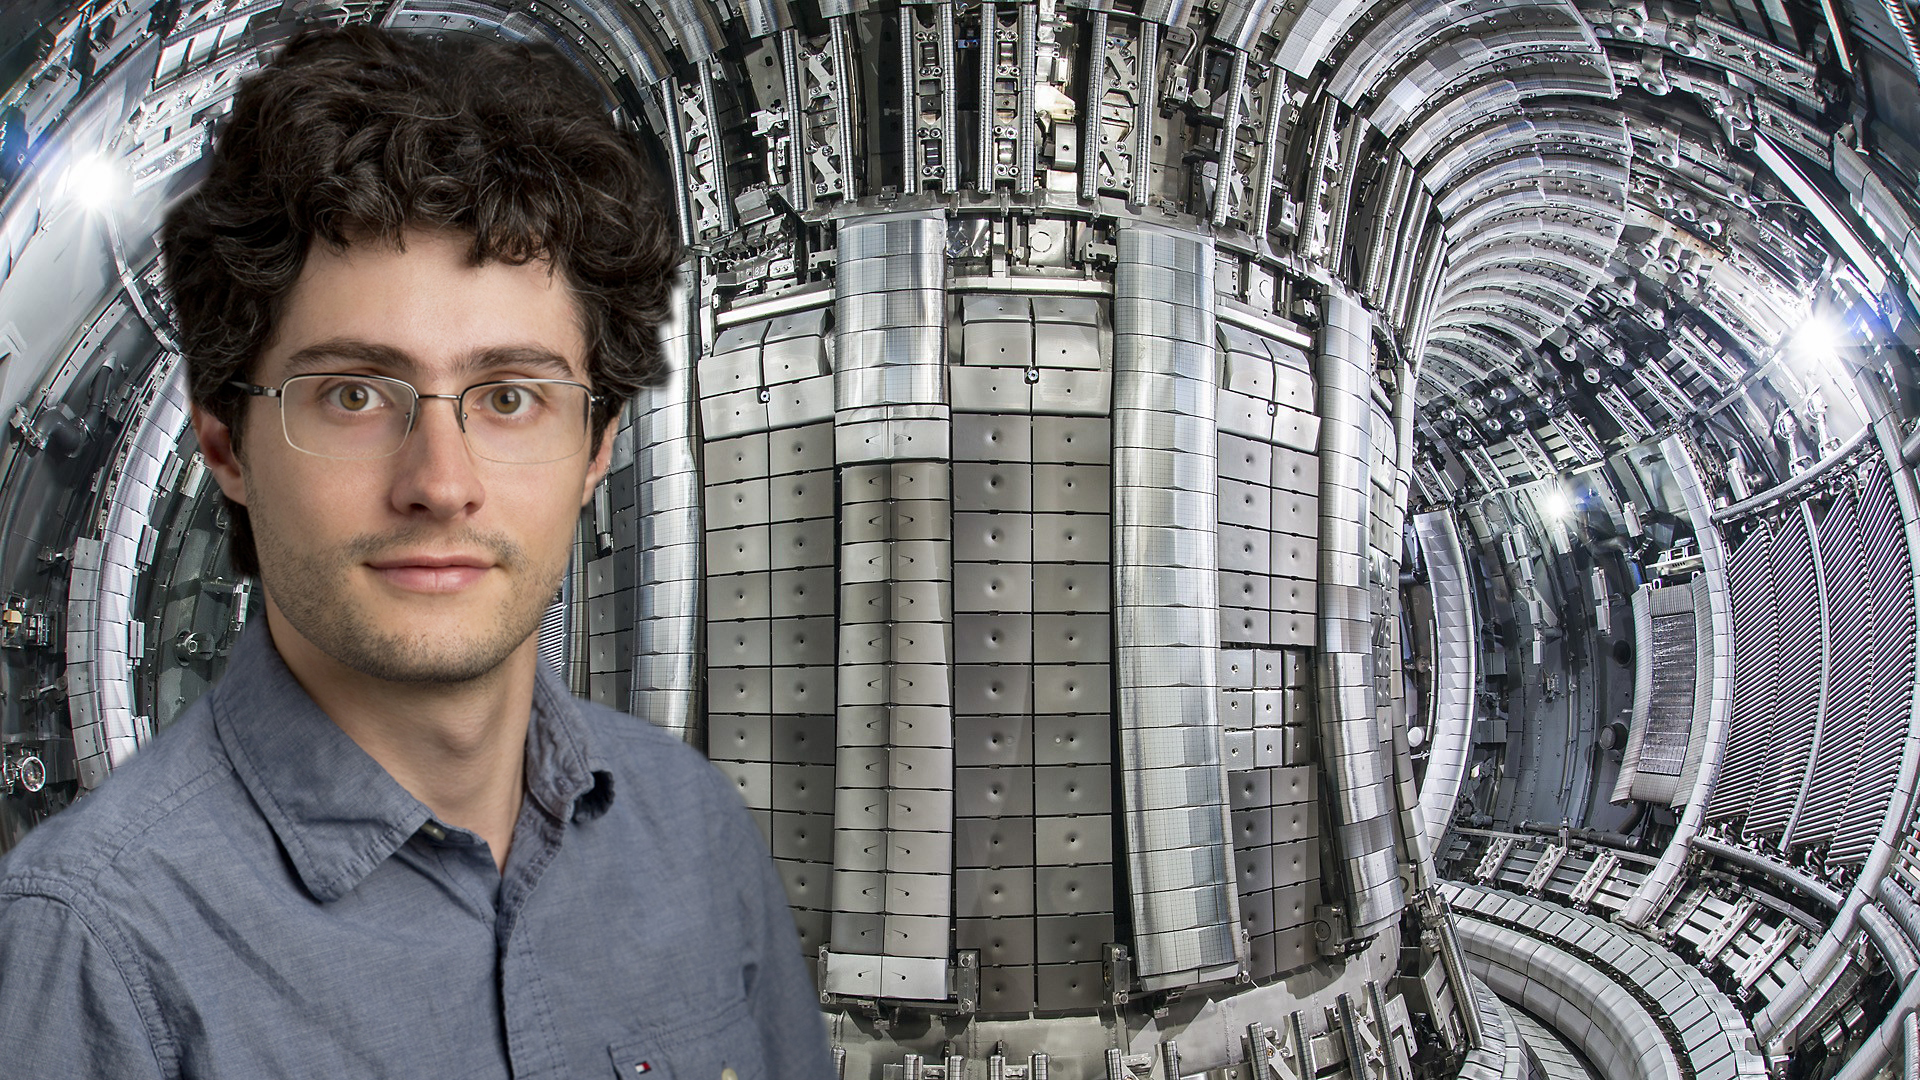 Curreli gains DOE SciDAC grant to model Plasma-Facing Components in fusion reactors